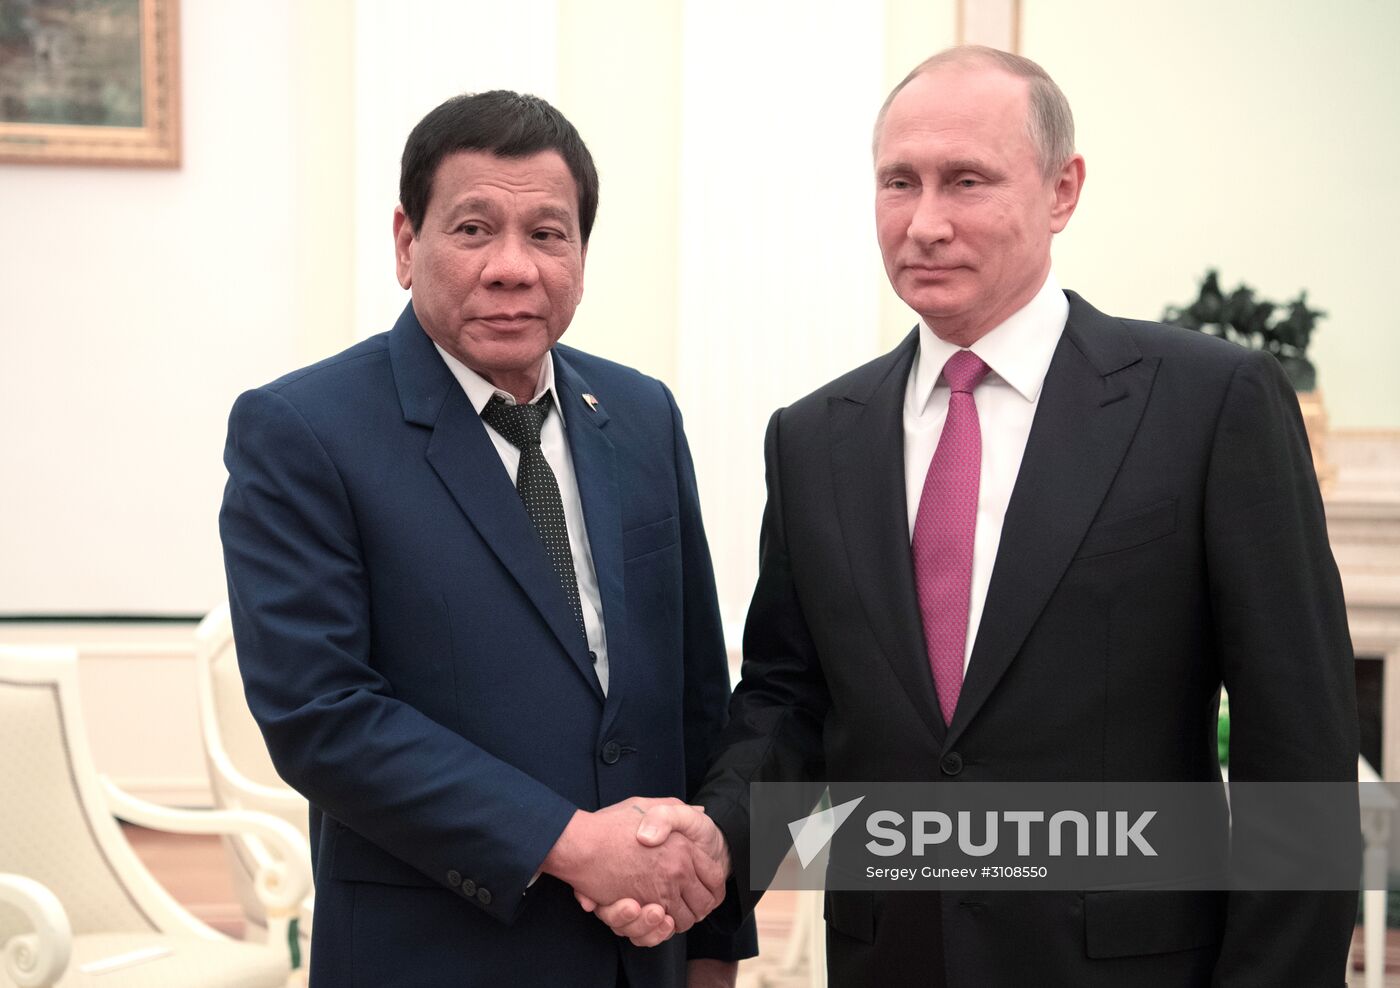 President Vladimir Putin meets with President of the Philippines Rodrigo Duterte